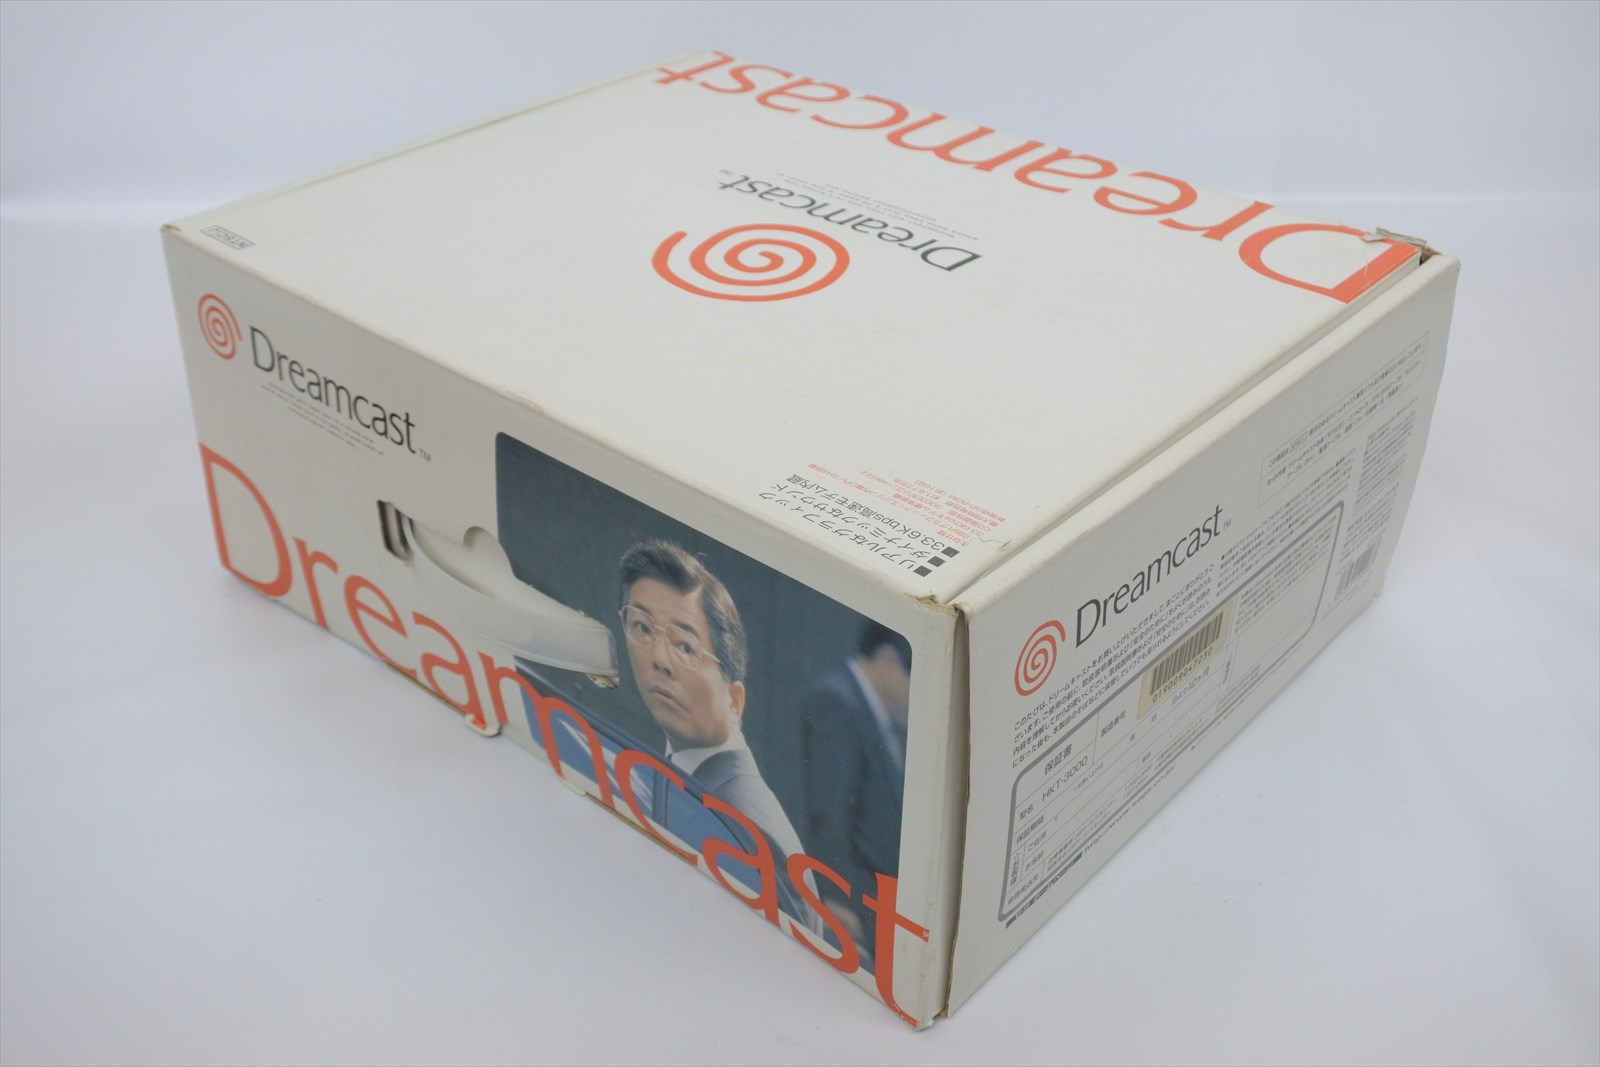 Dreamcast Sega Yukawa Console System Boxed 019009047230